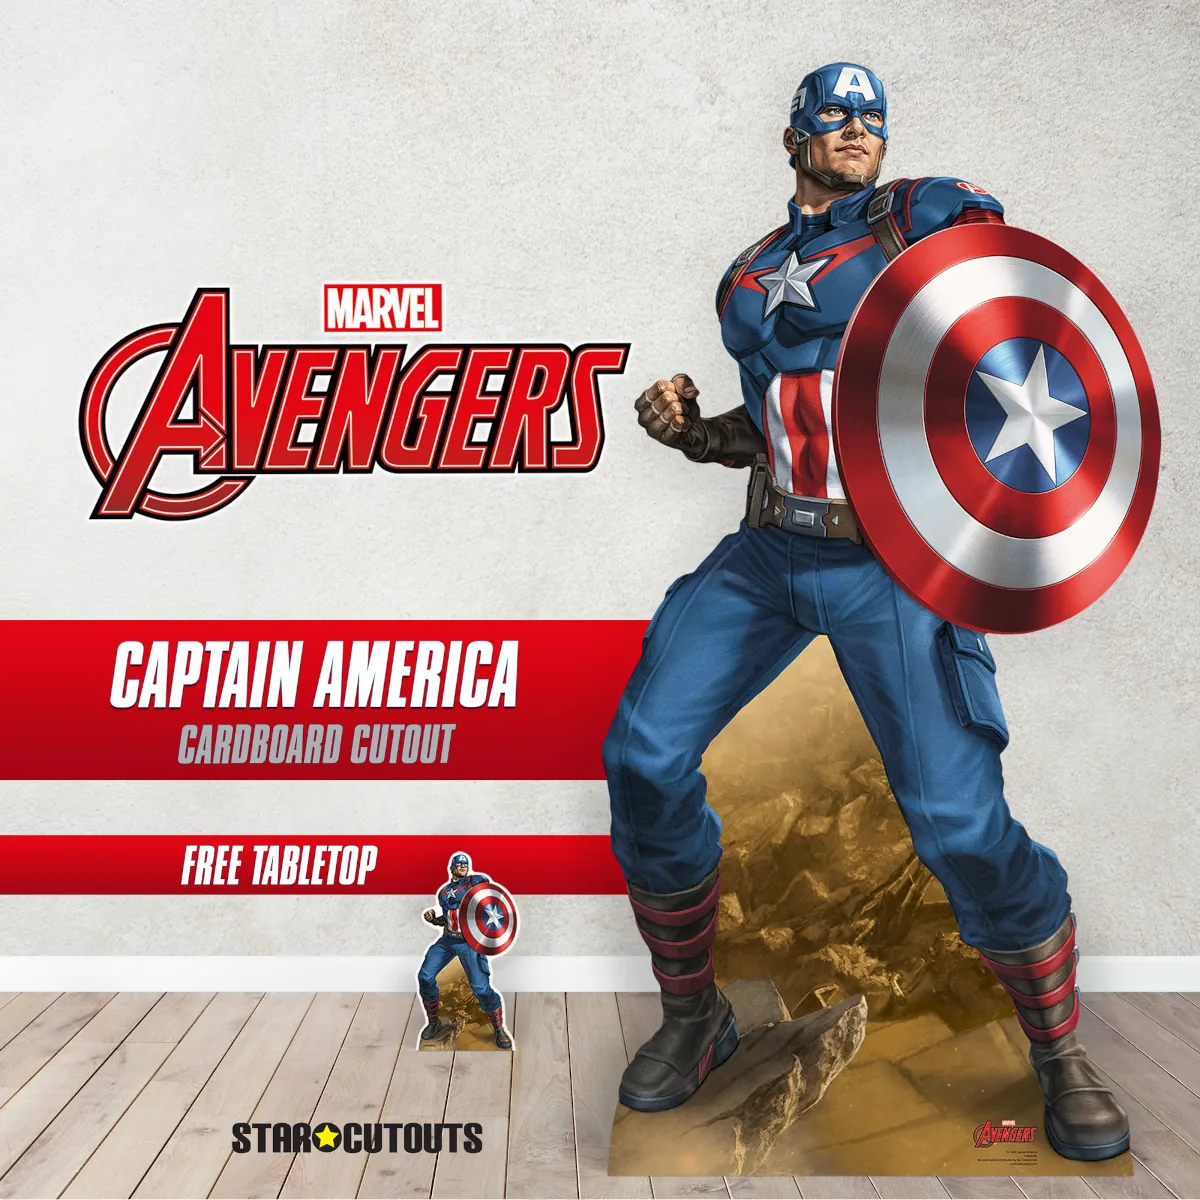 Captain America 'Earth's Mightiest Hero' (Marvel Avengers) Lifesize + Mini Cardboard Cutout Room